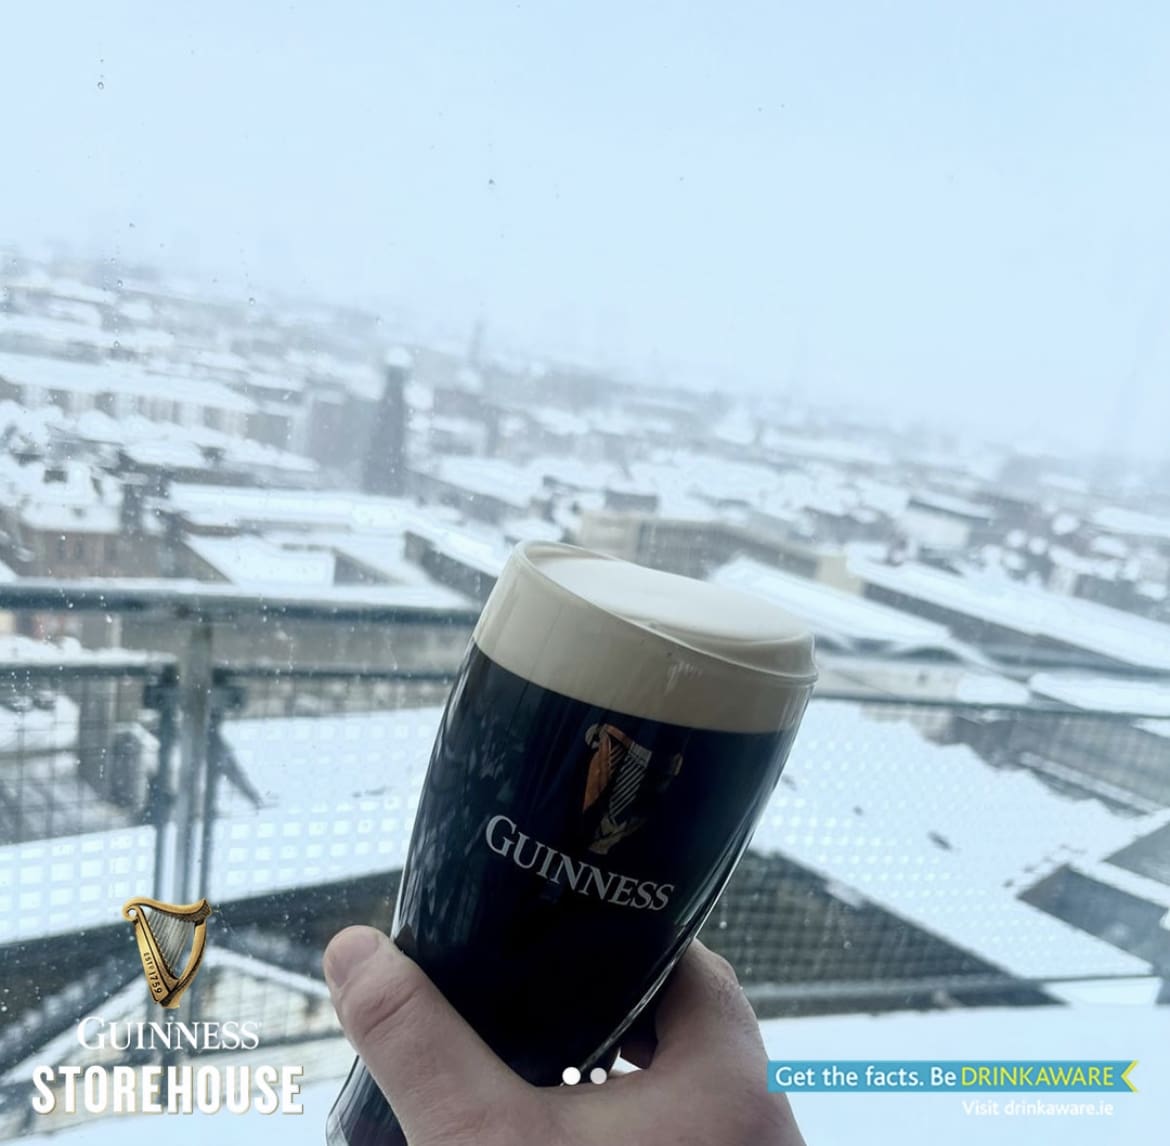 Guinness storehouse views